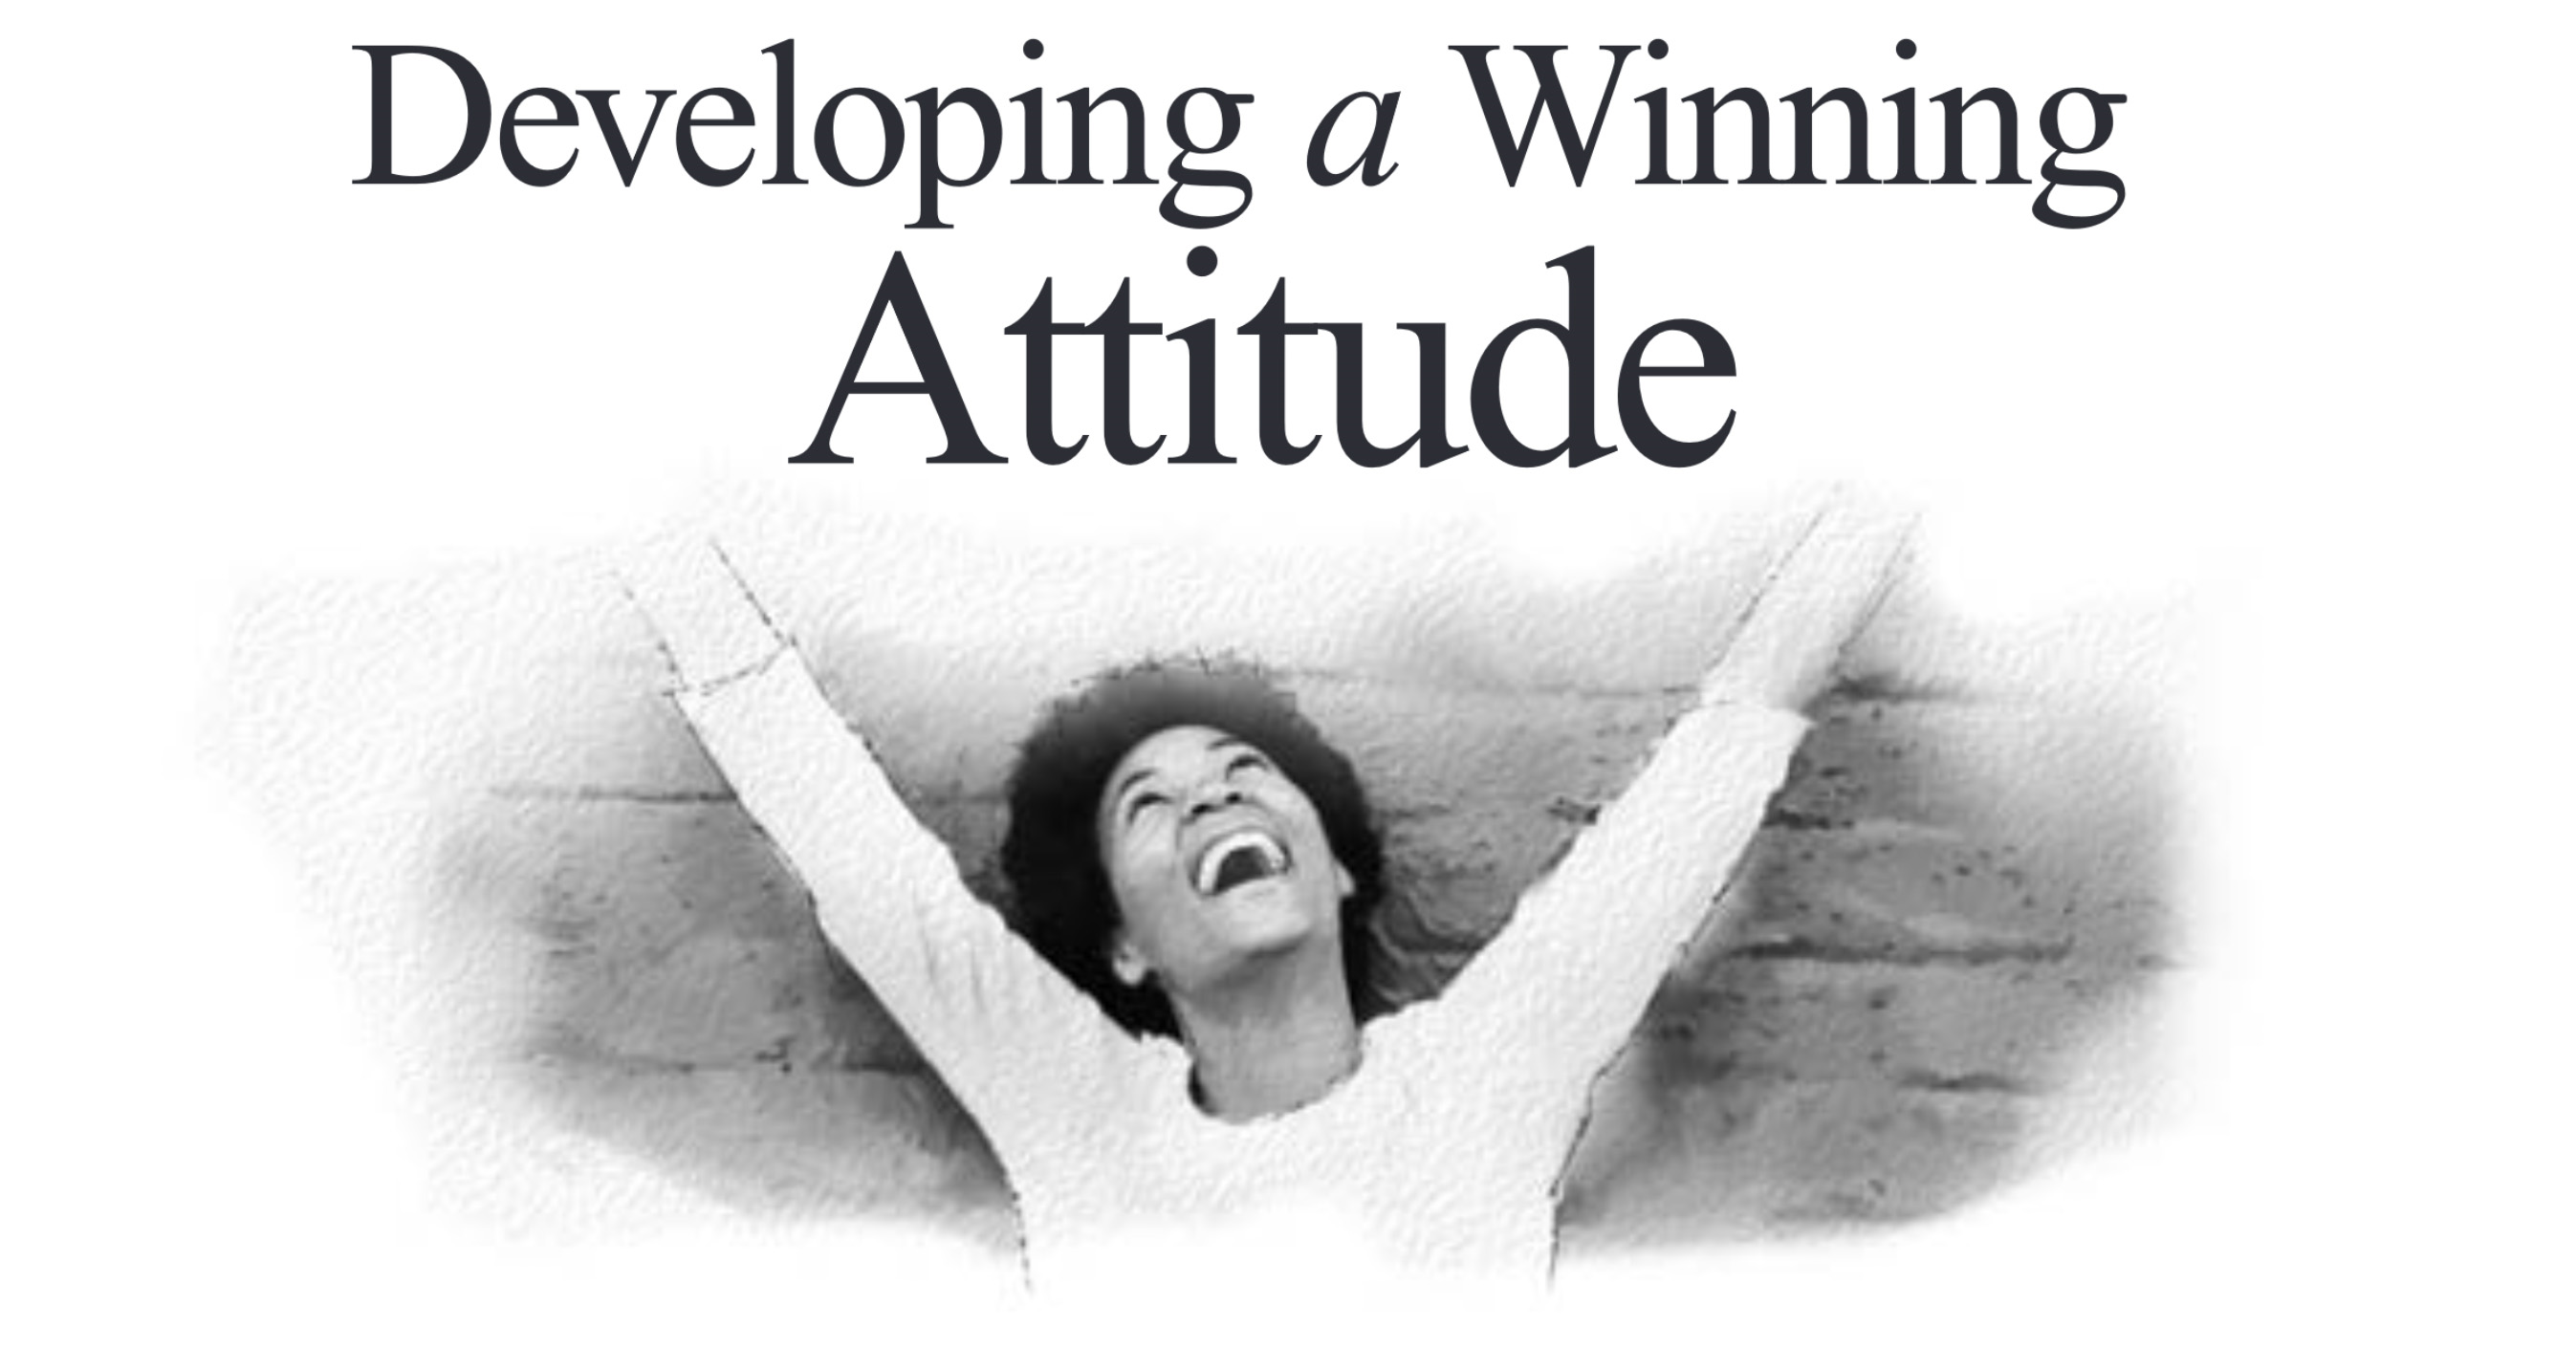 Developing a Winning Attitude